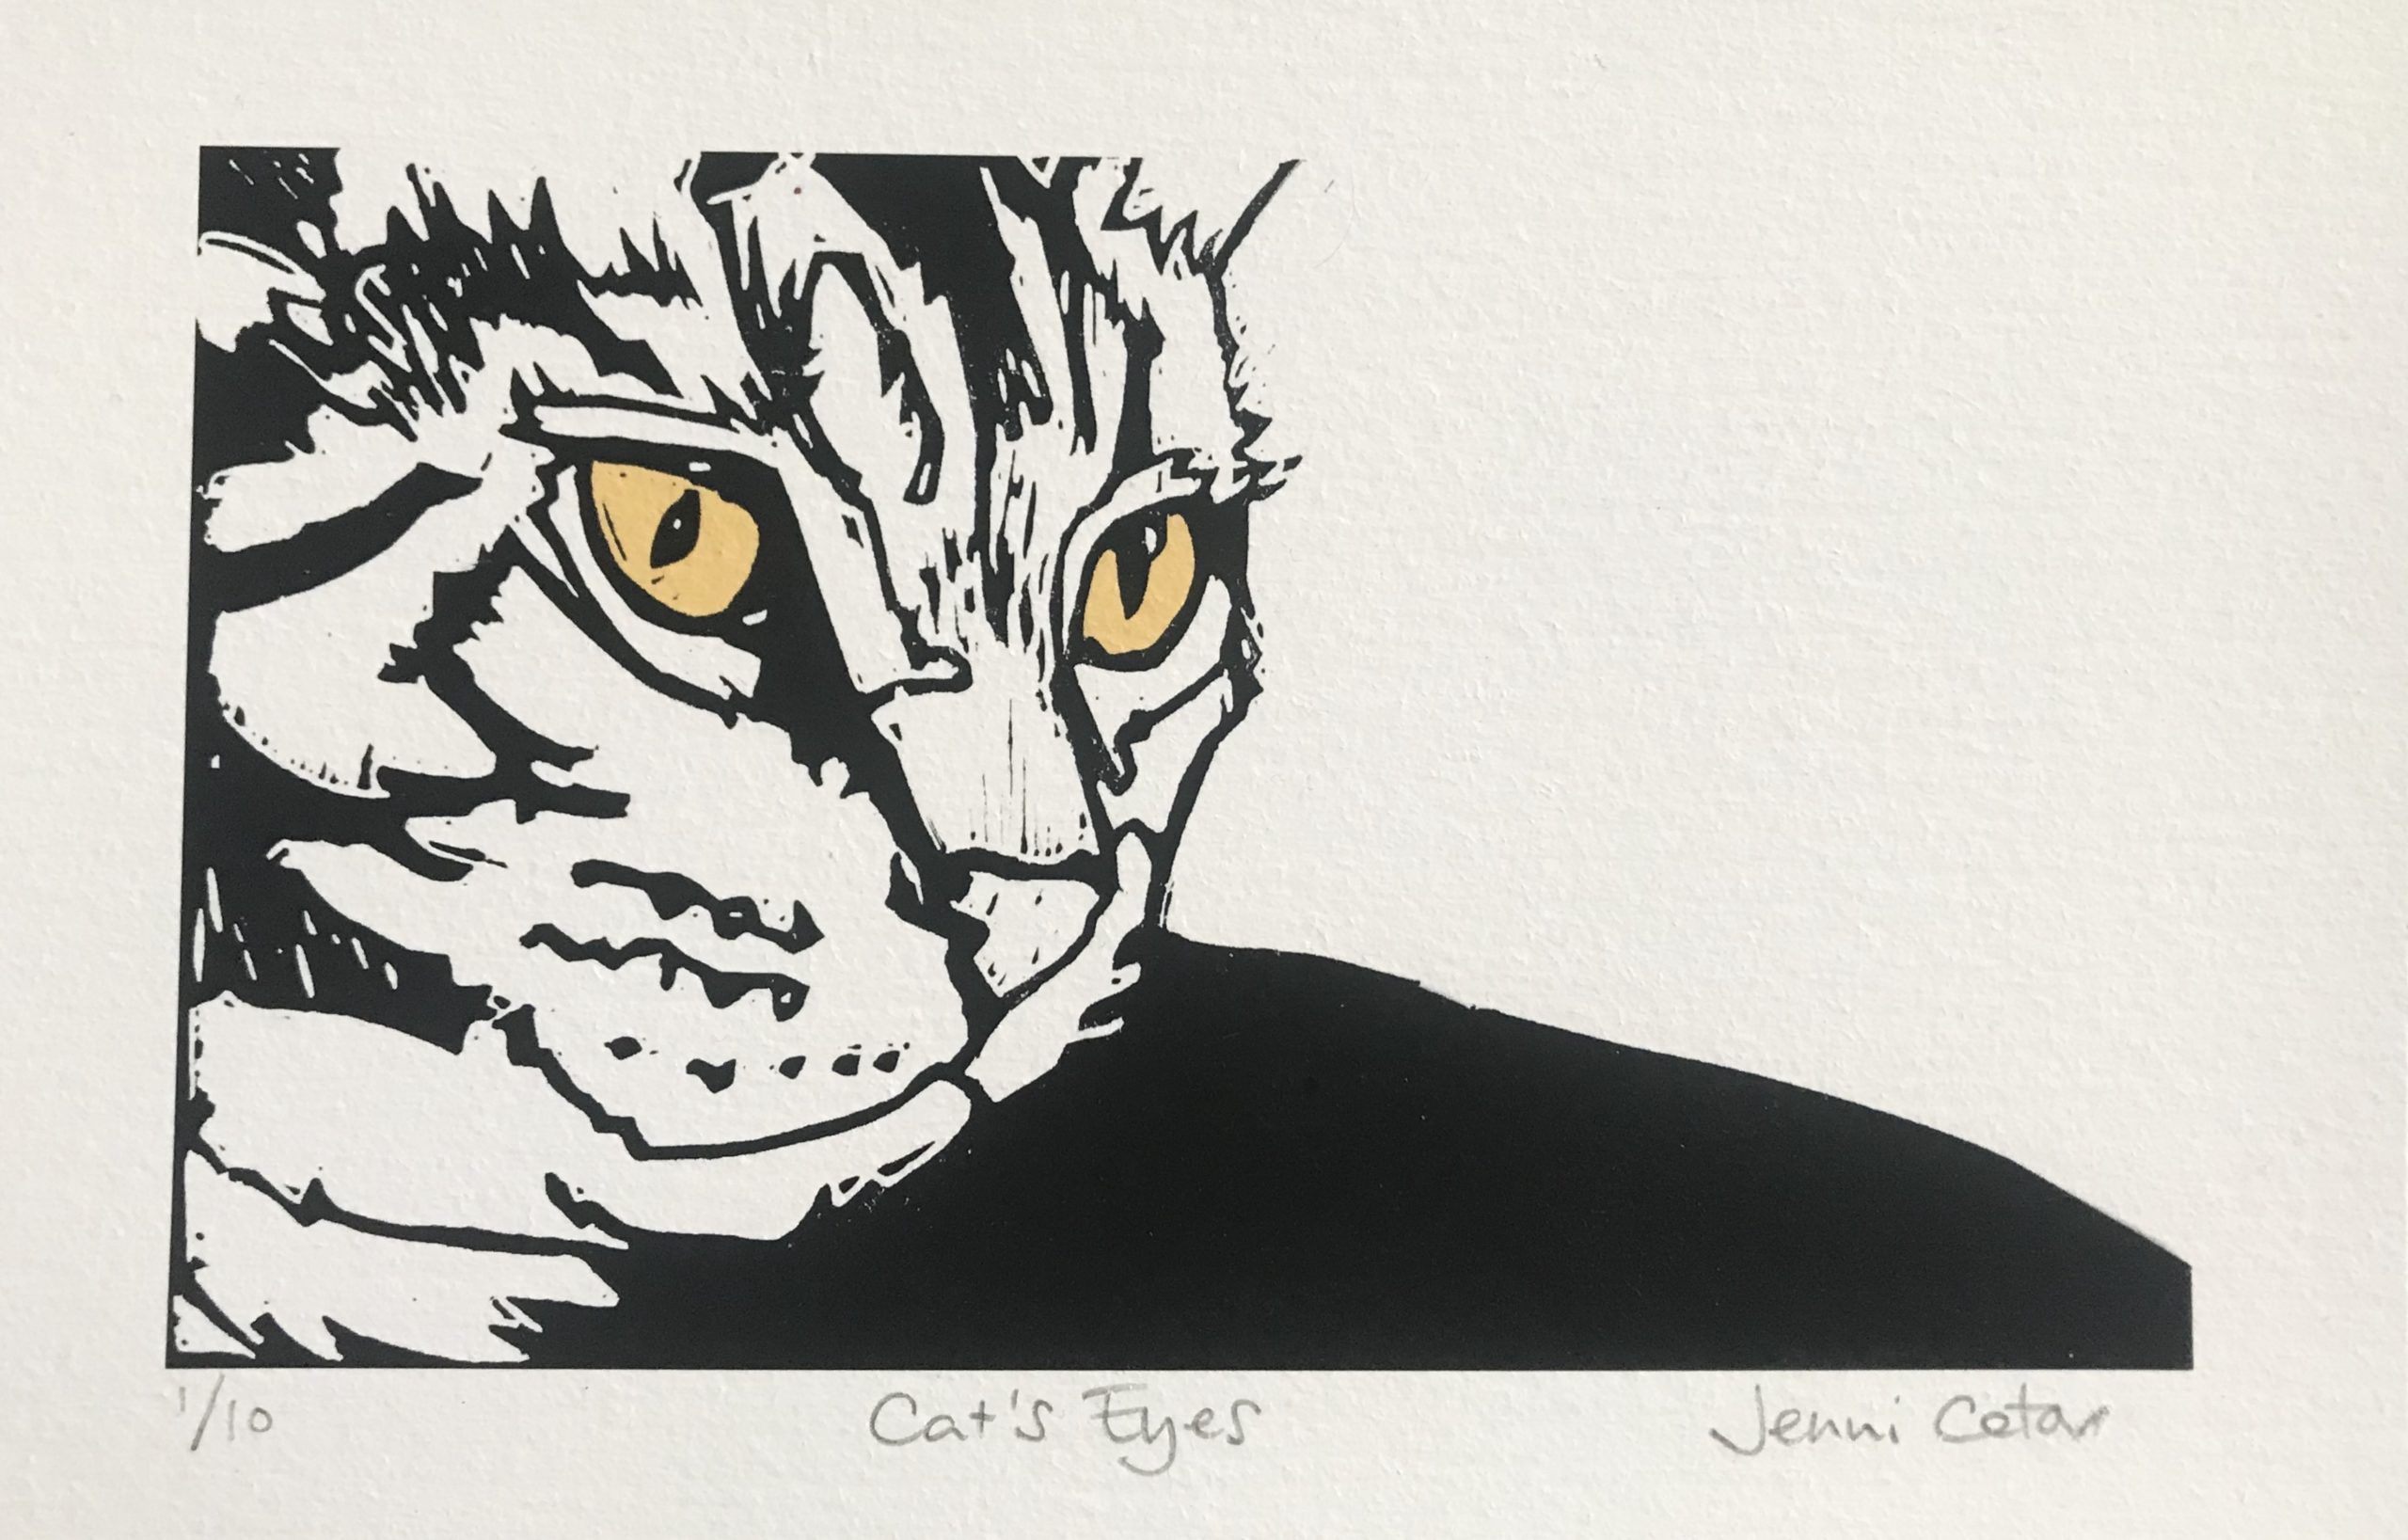 CAT'S EYES - Jenni Cator